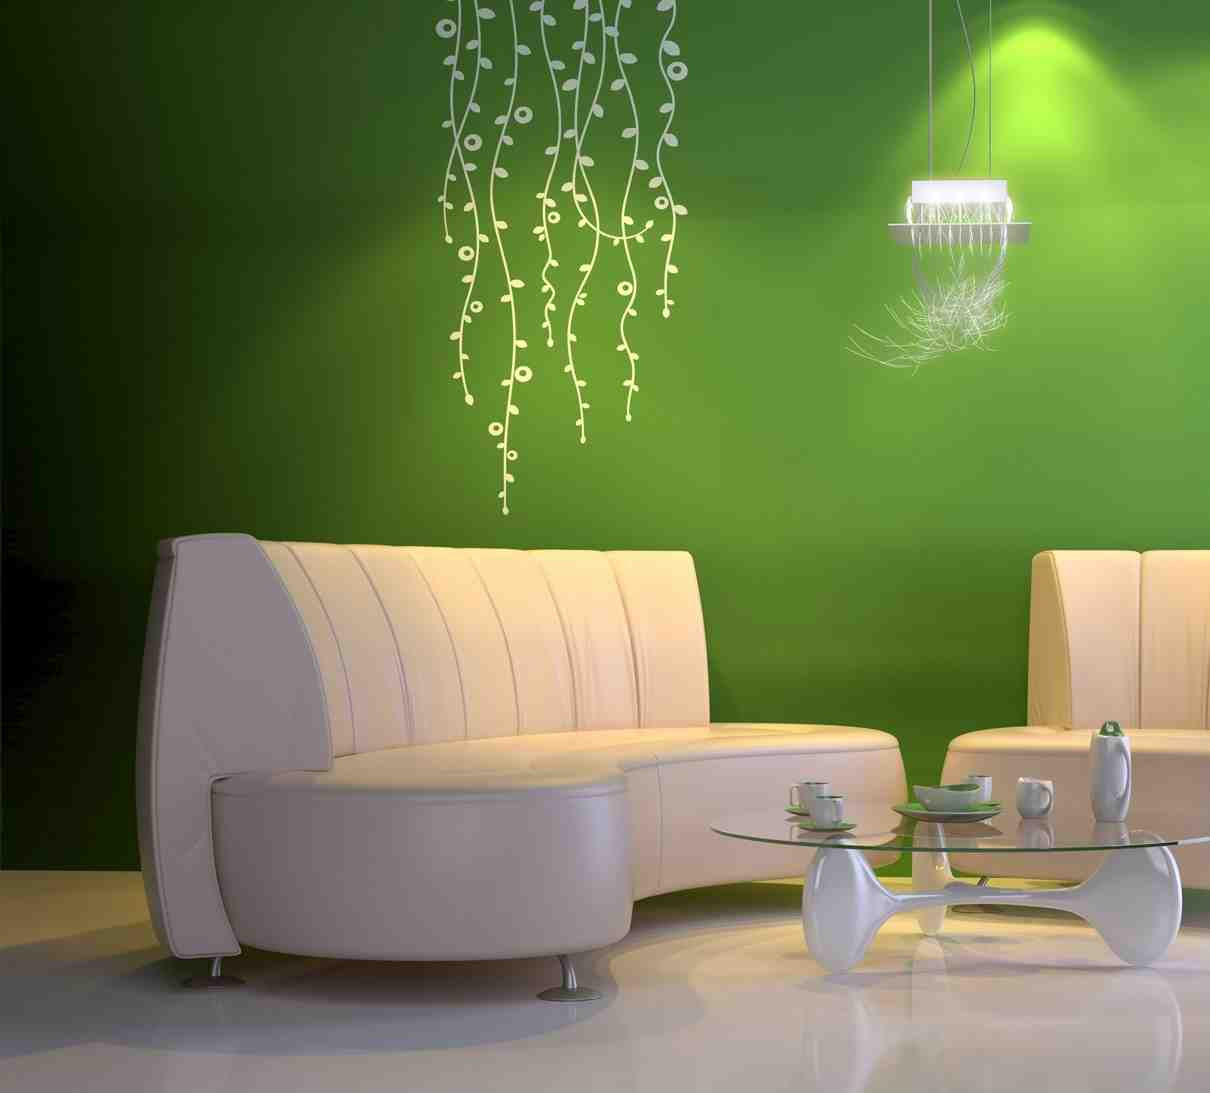 Living Room Painting Designs
 Valspar Living Room Paint Ideas